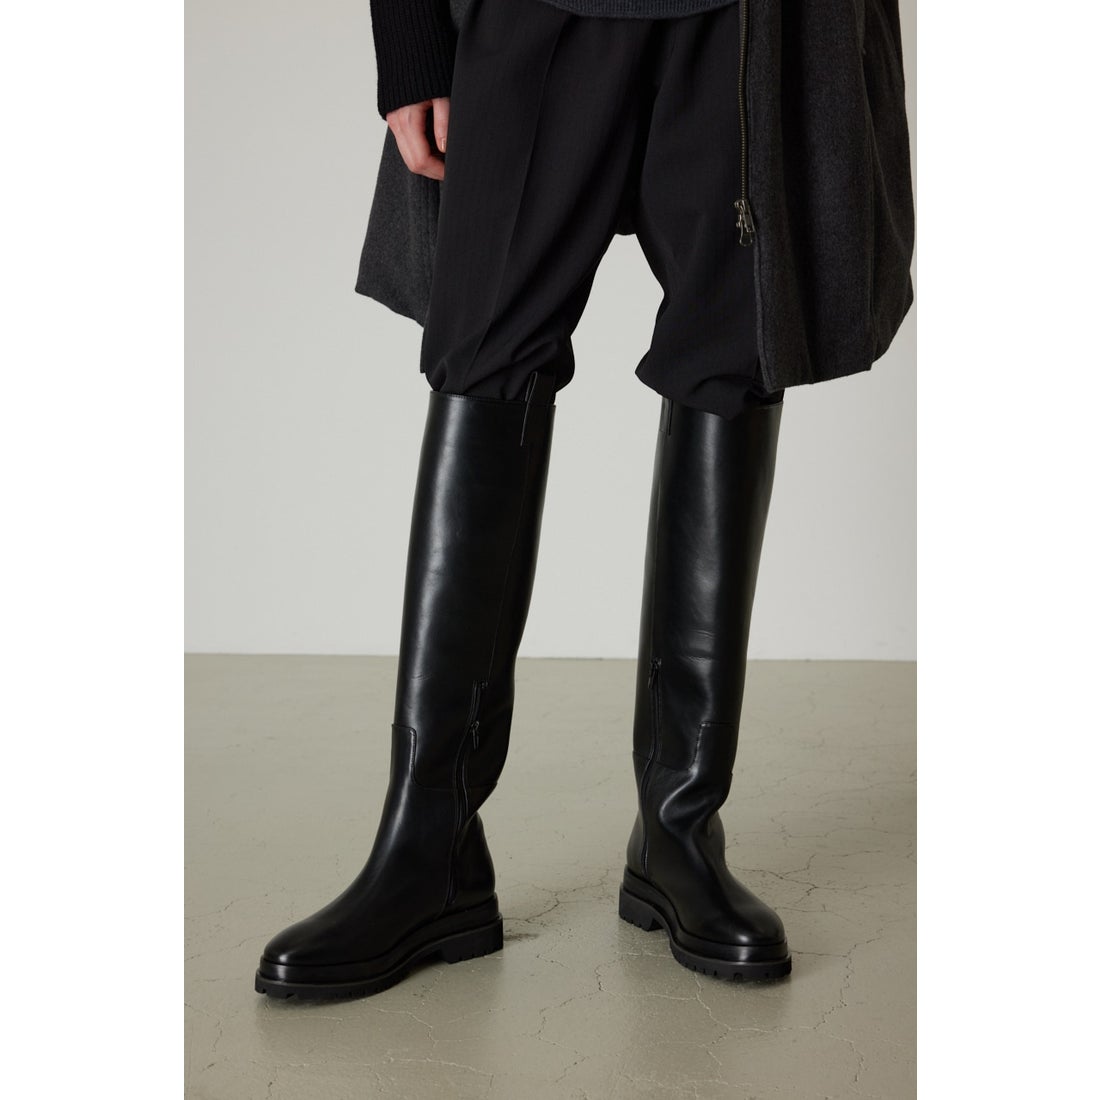 Rim.ark★Long knee length boots